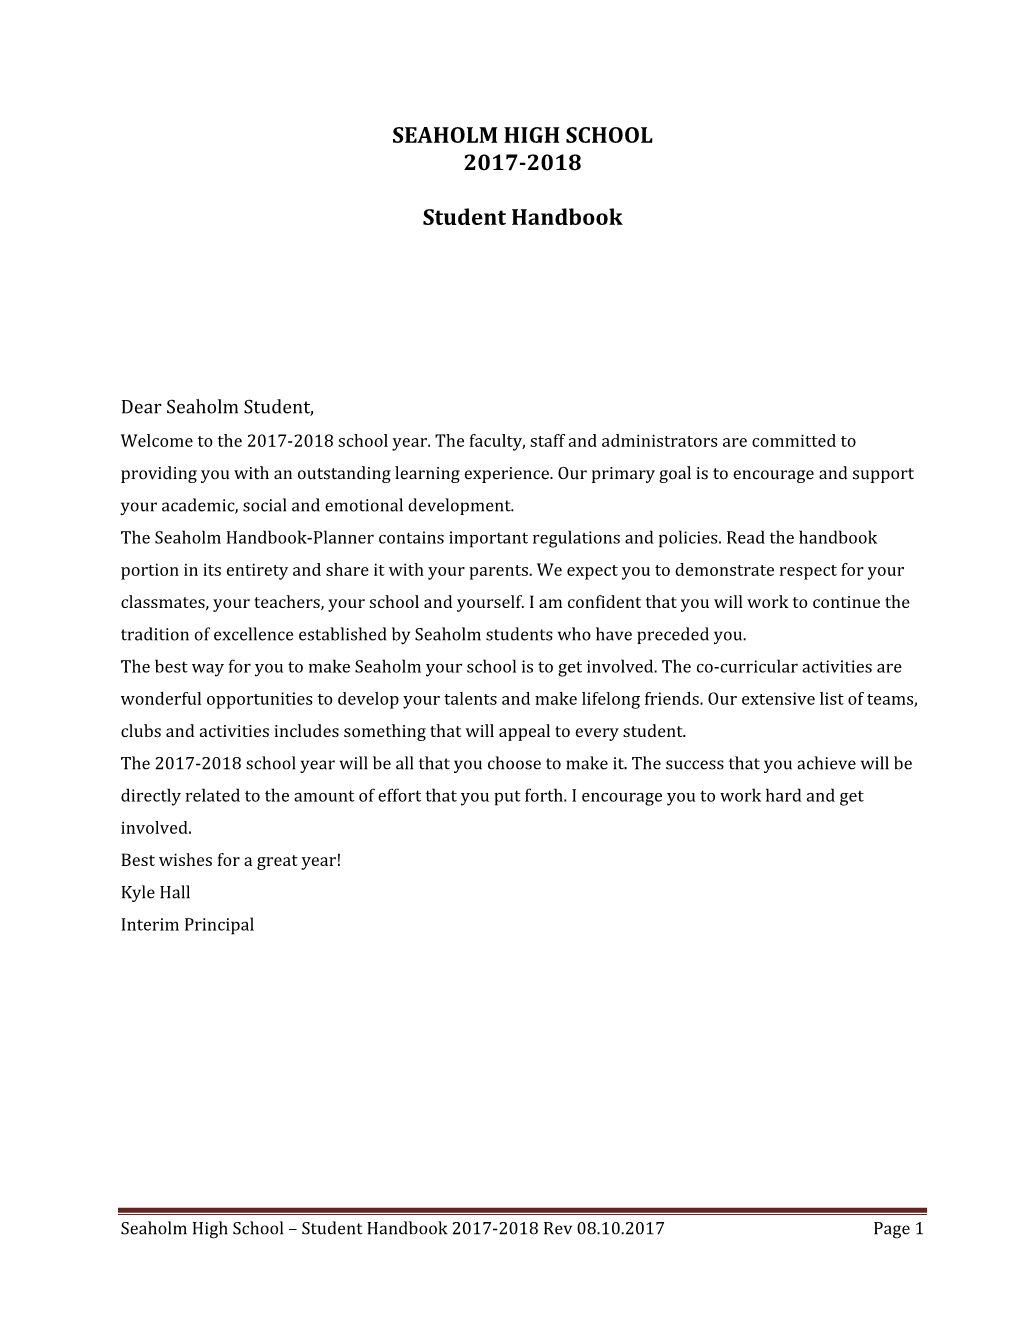 SEAHOLM HIGH SCHOOL 2017-2018 Student Handbook